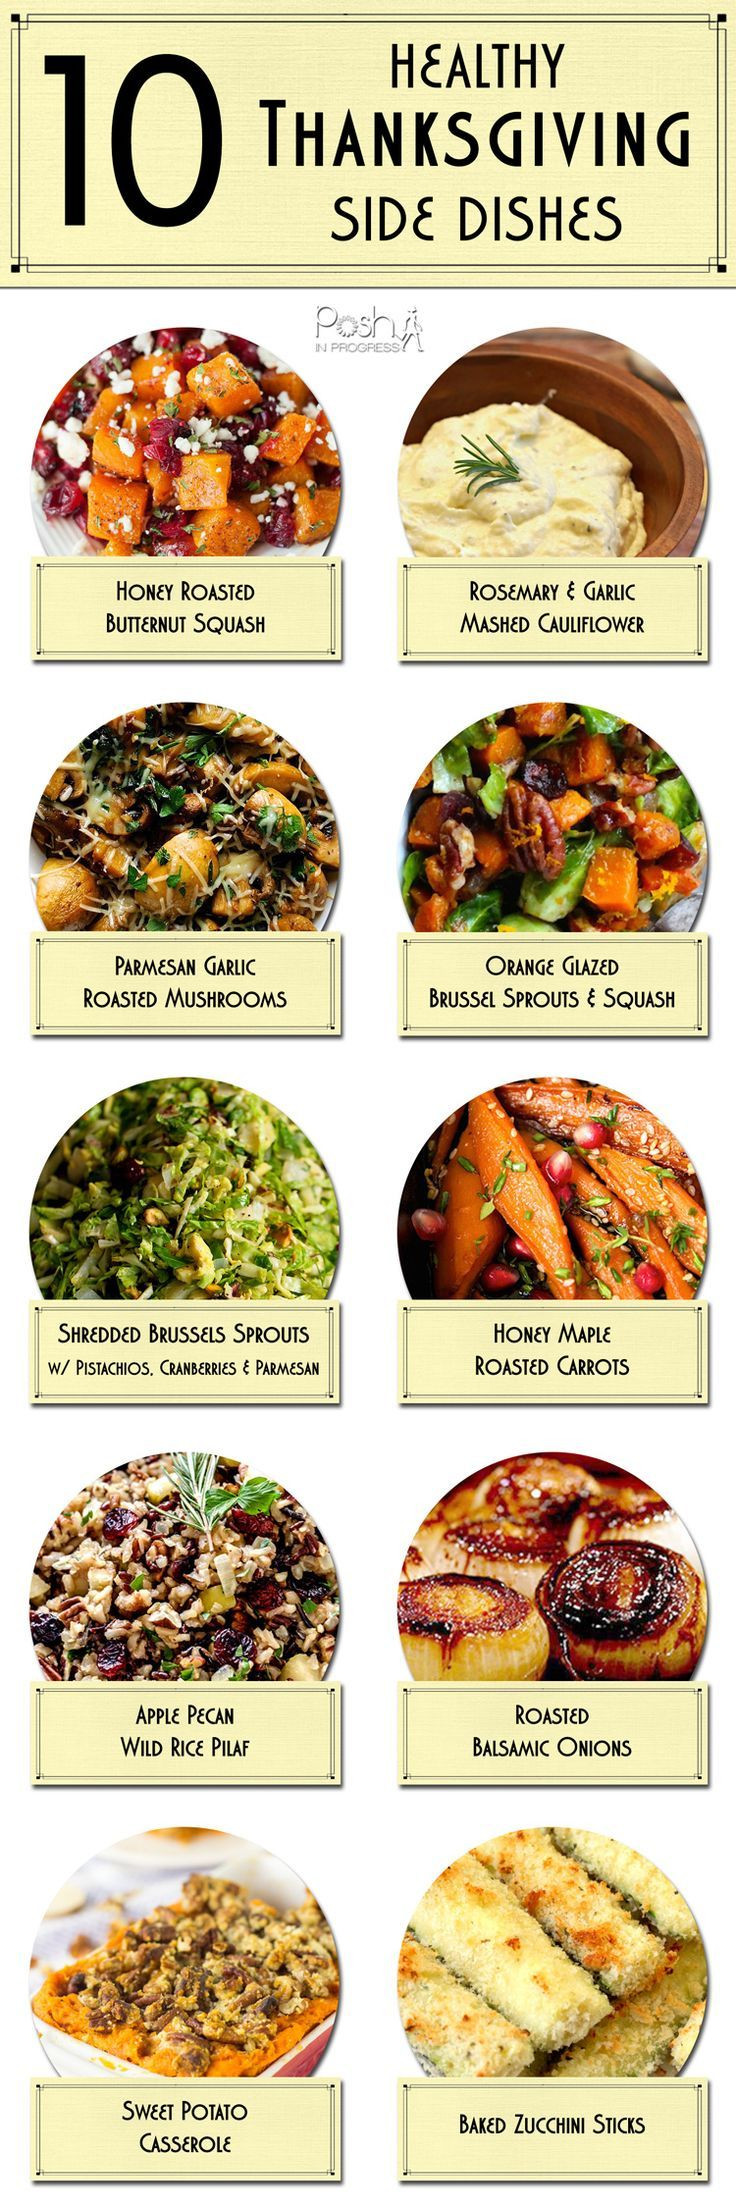 Healthy Thanksgiving Menu
 Best 25 Thanksgiving menu ideas on Pinterest